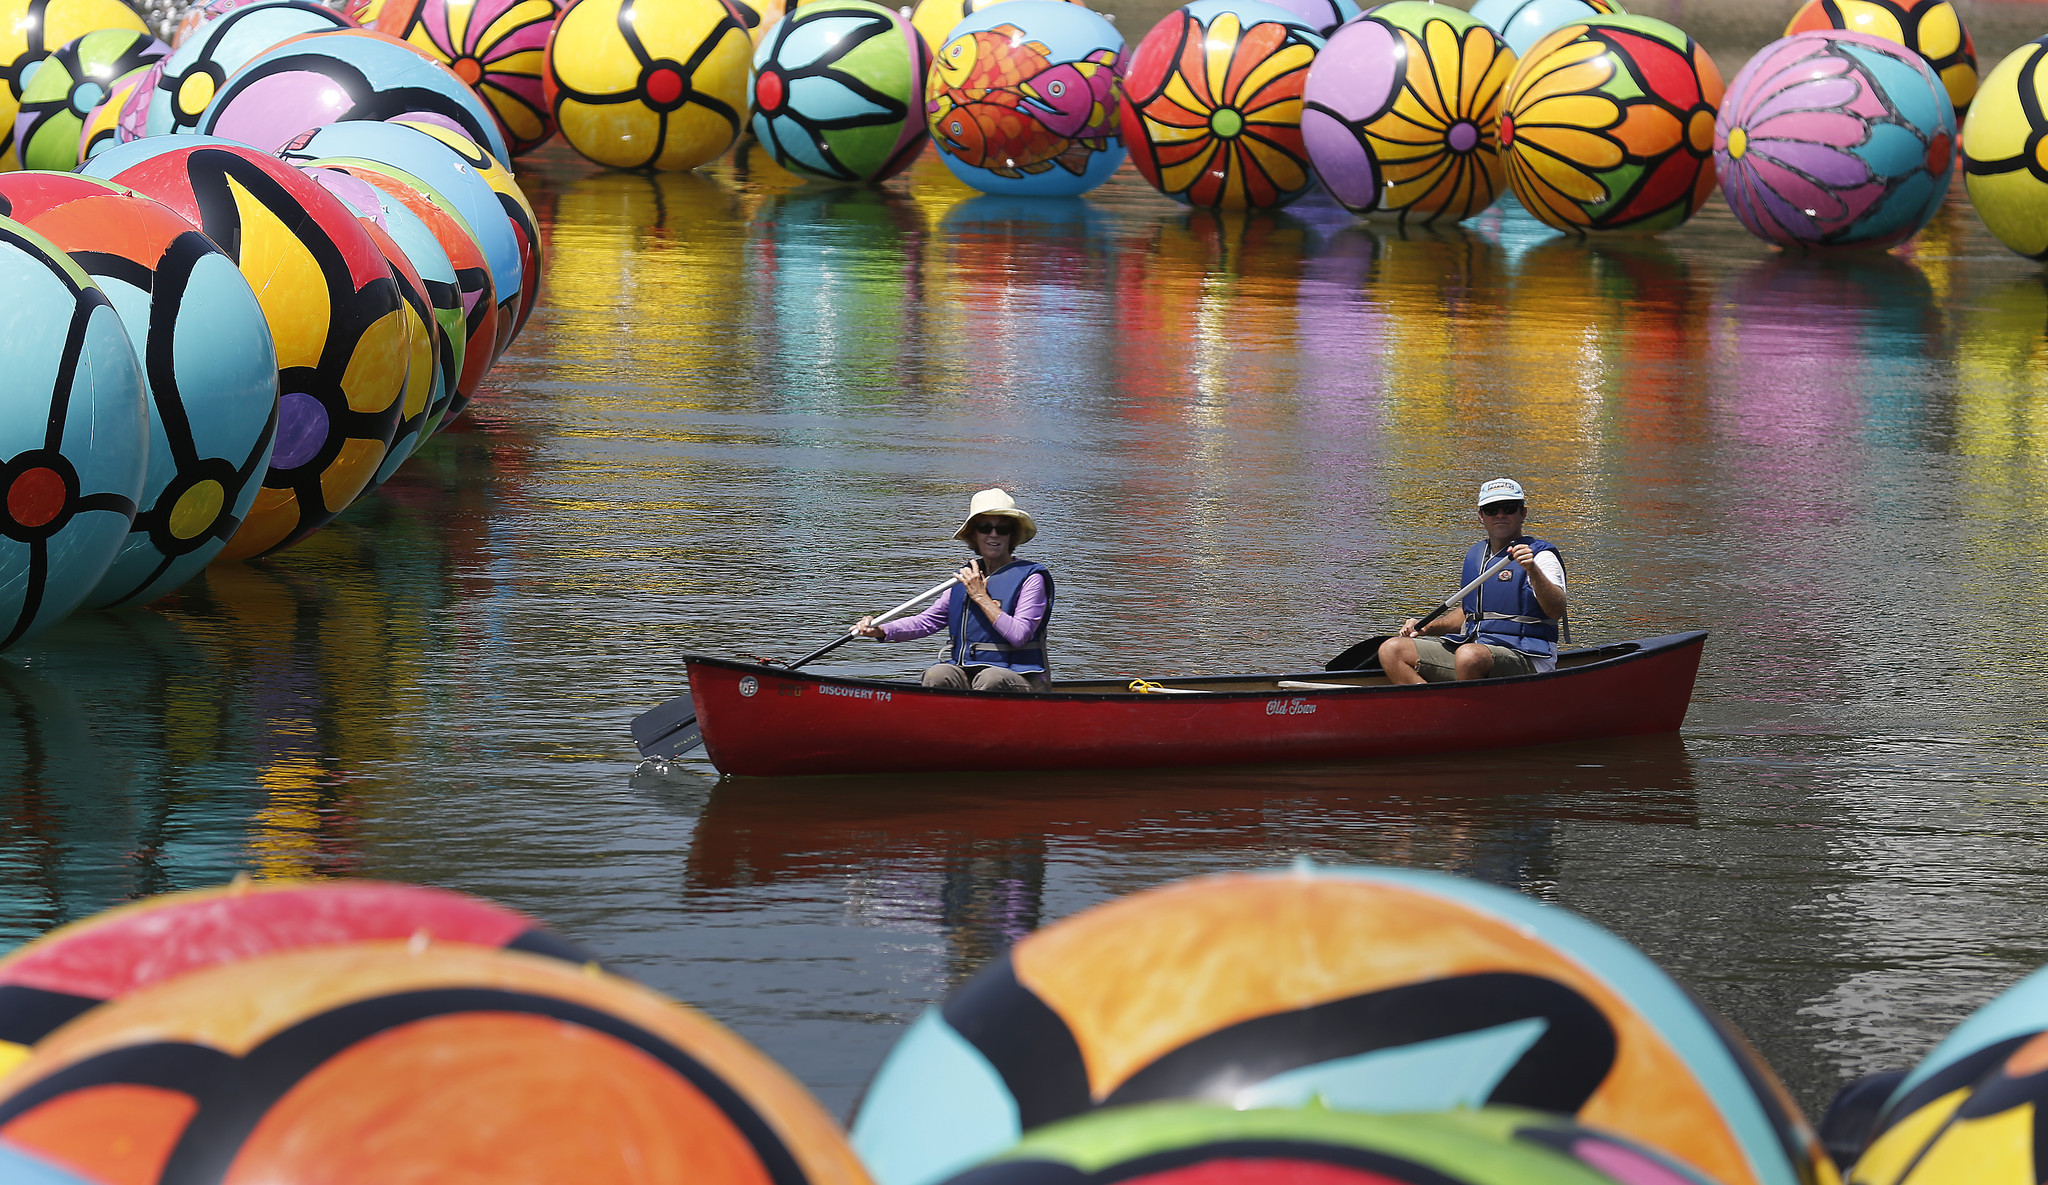 la-et-cam-charitable-art-project-filling-macarthur-park-lake-with-thousands-of-colorful-spheres-20150822